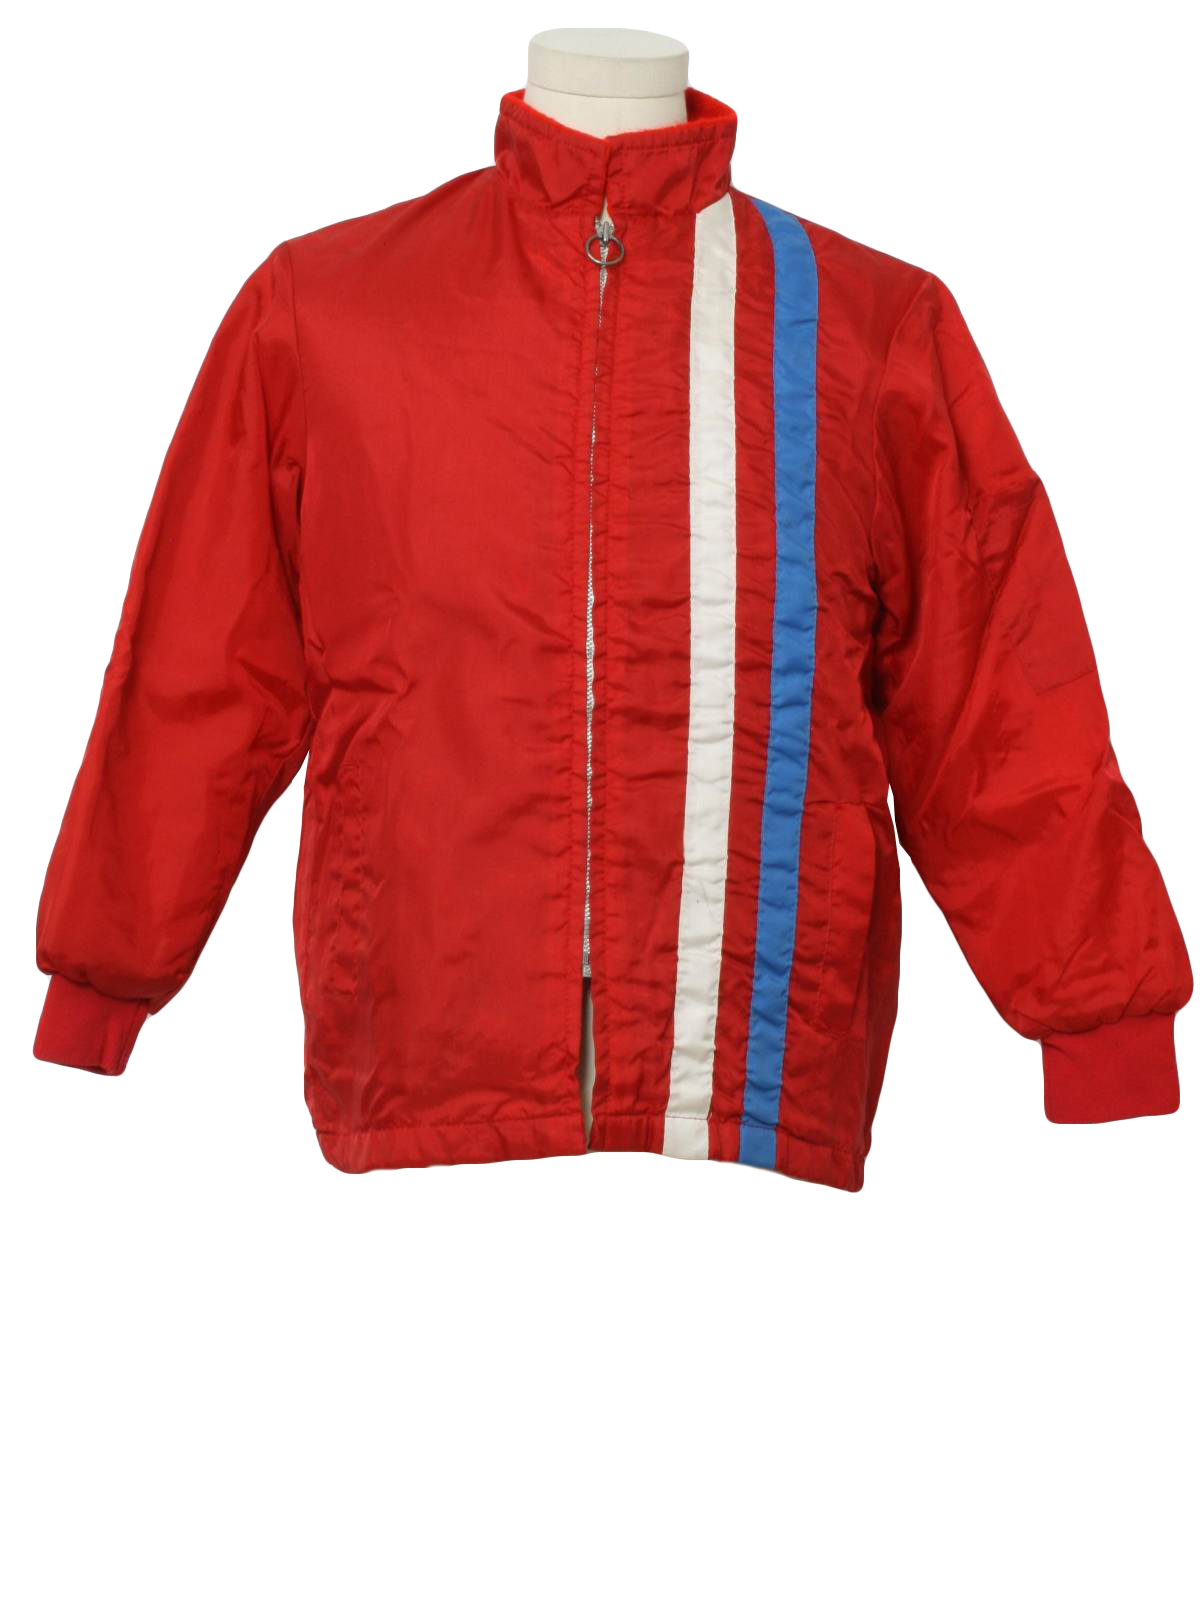 Retro Seventies Jacket: 70s -No Label- Mens or boys bright red nylon ...